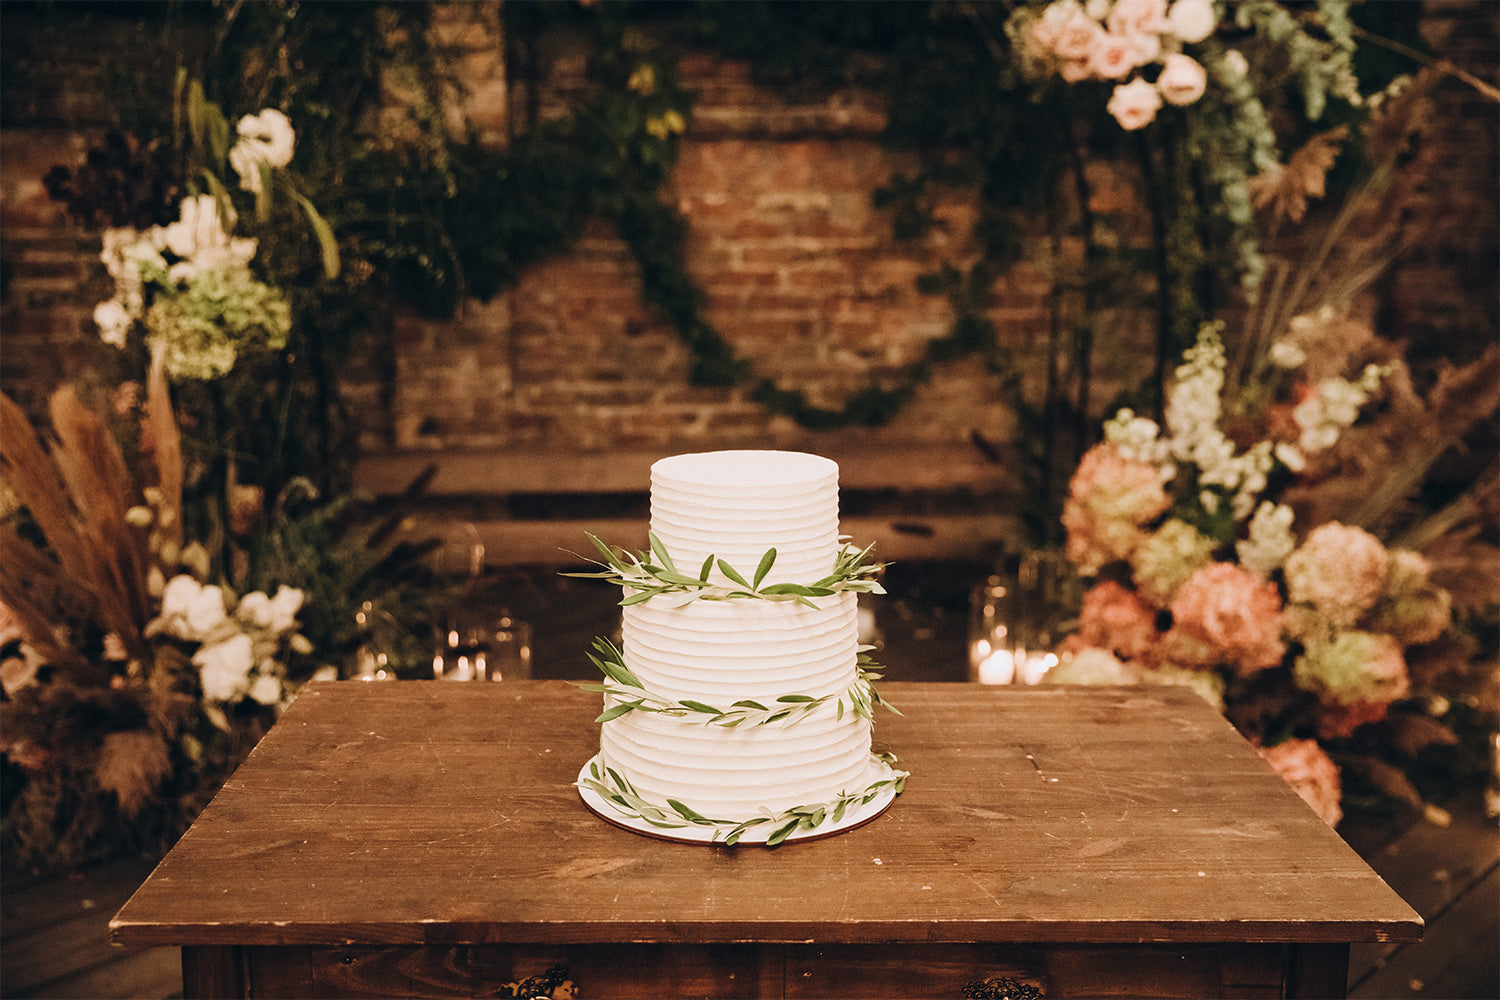 Vegan wedding cake sitting on a wooden table